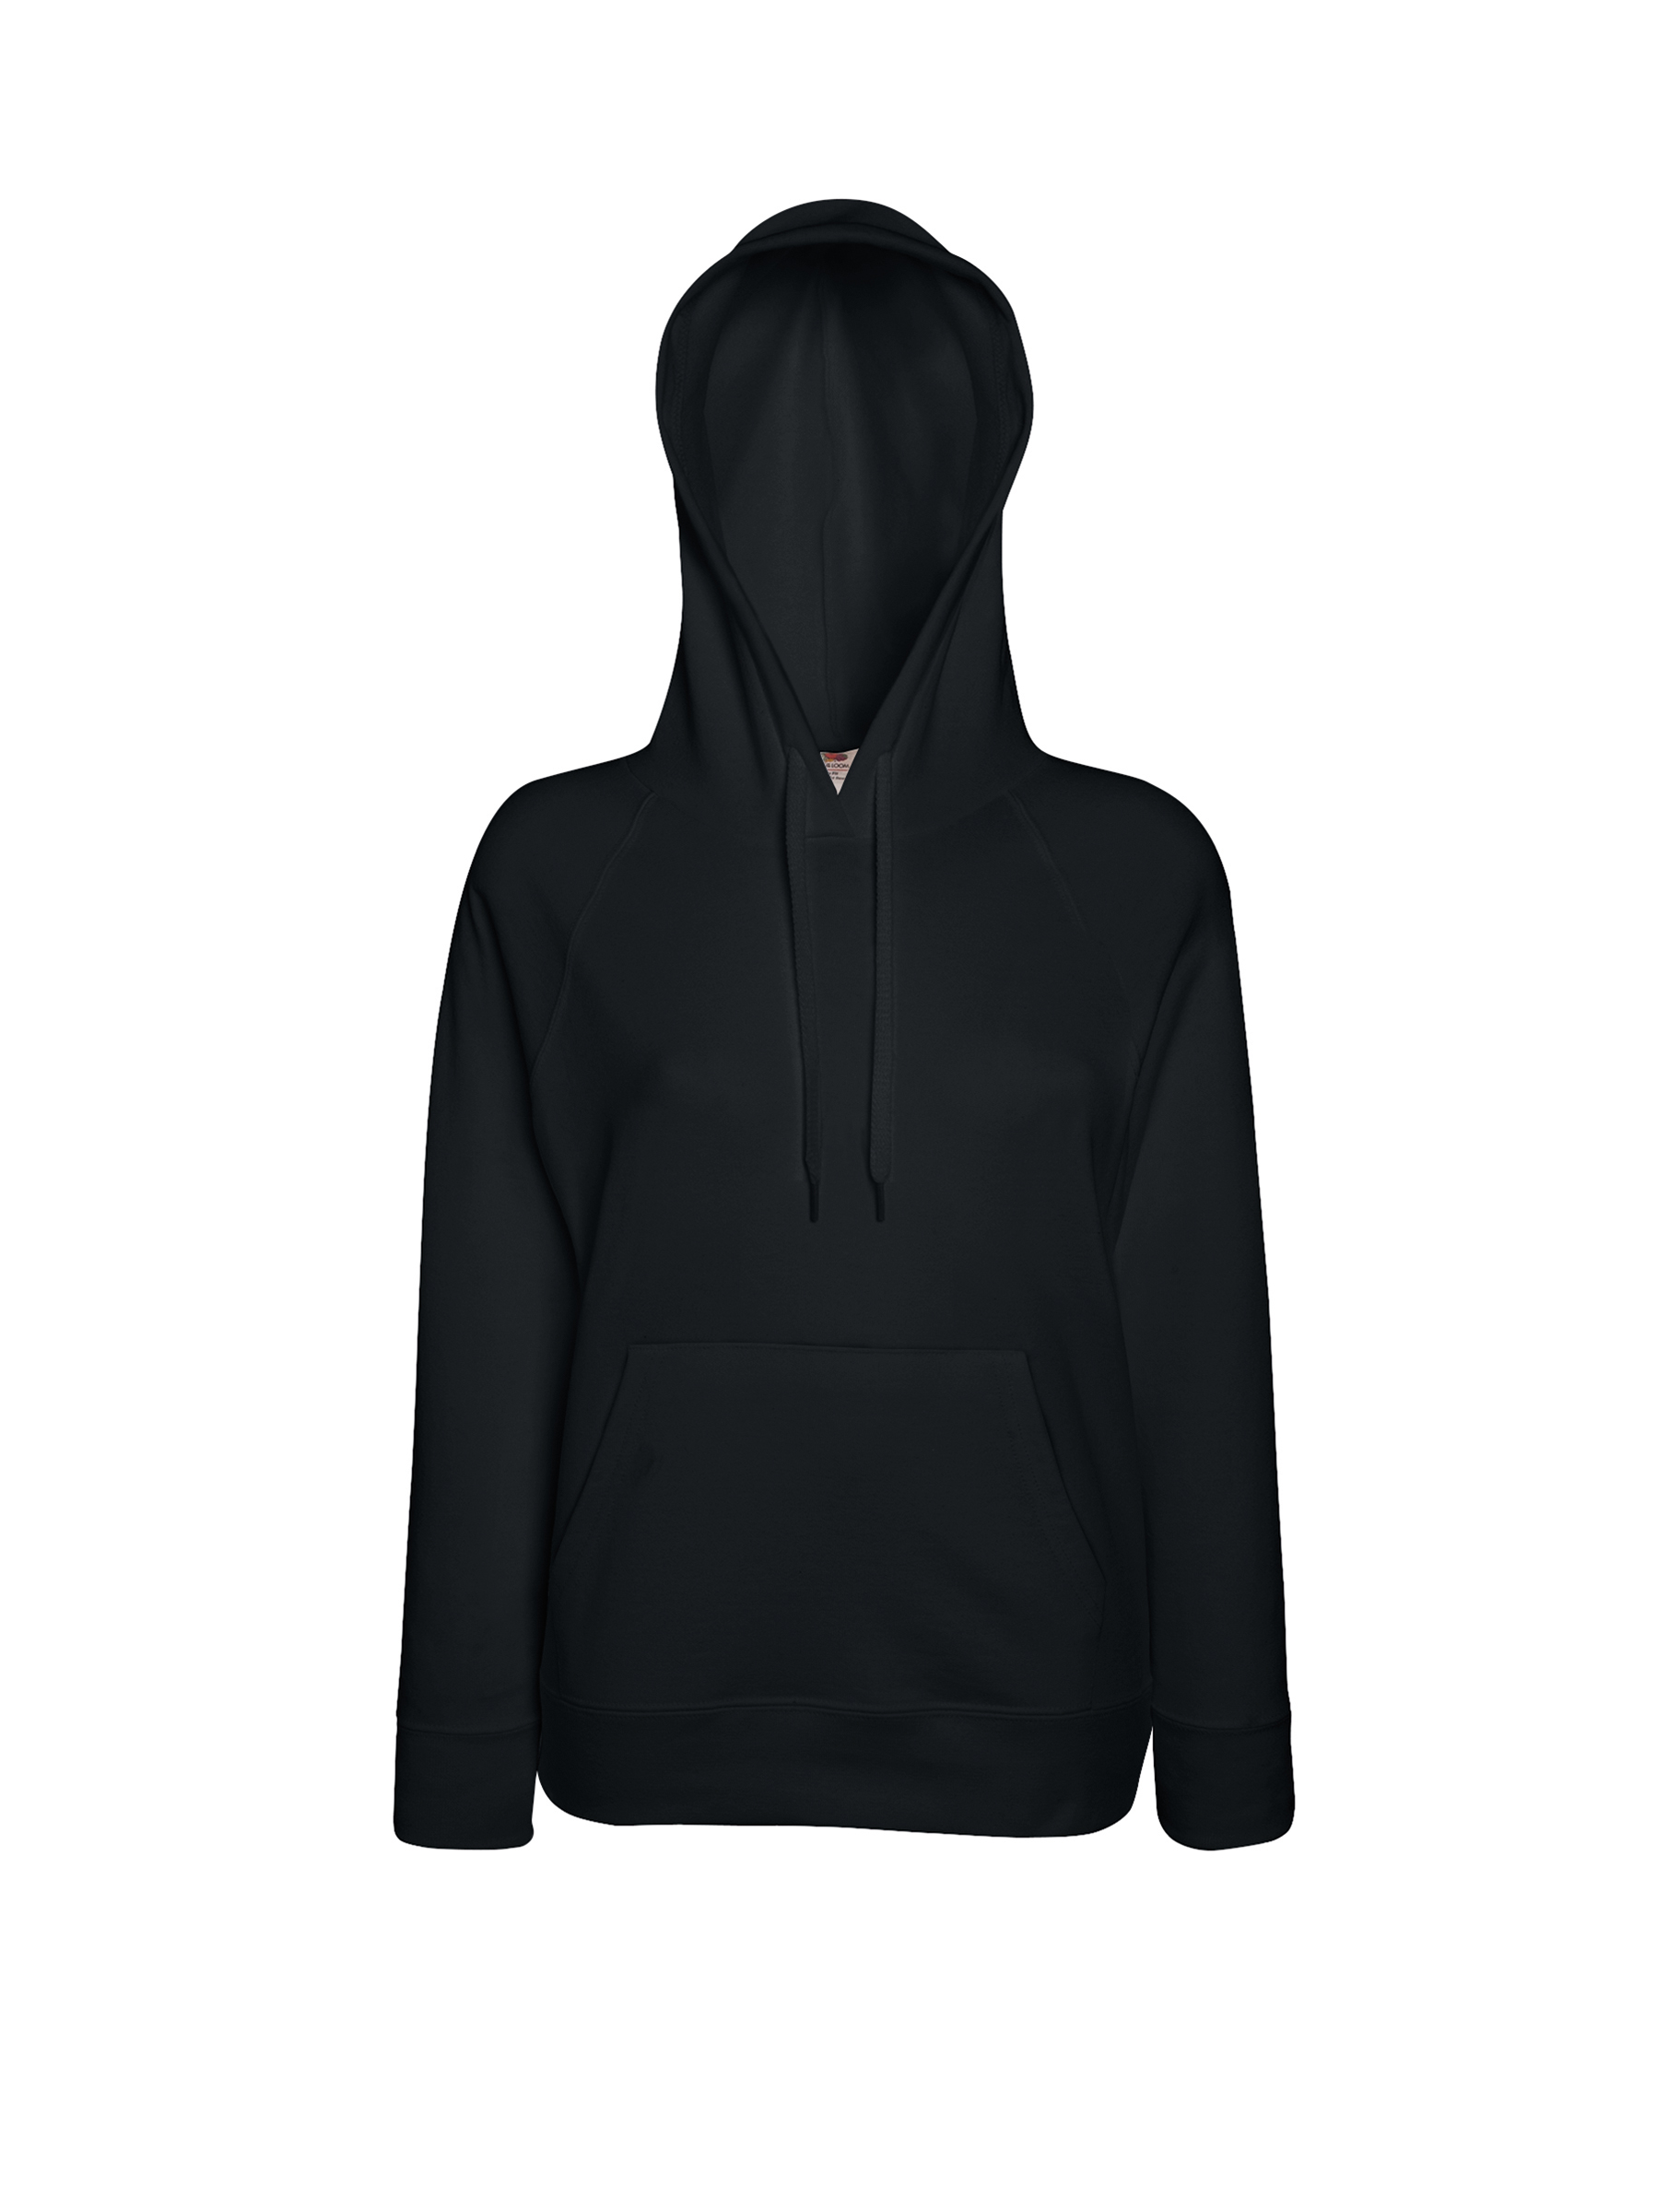 ax-httpswebsystems.s3.amazonaws.comtmp_for_downloadfruit-of-the-loom-womens-lightweight-hooded-sweatshirt-black.jpeg